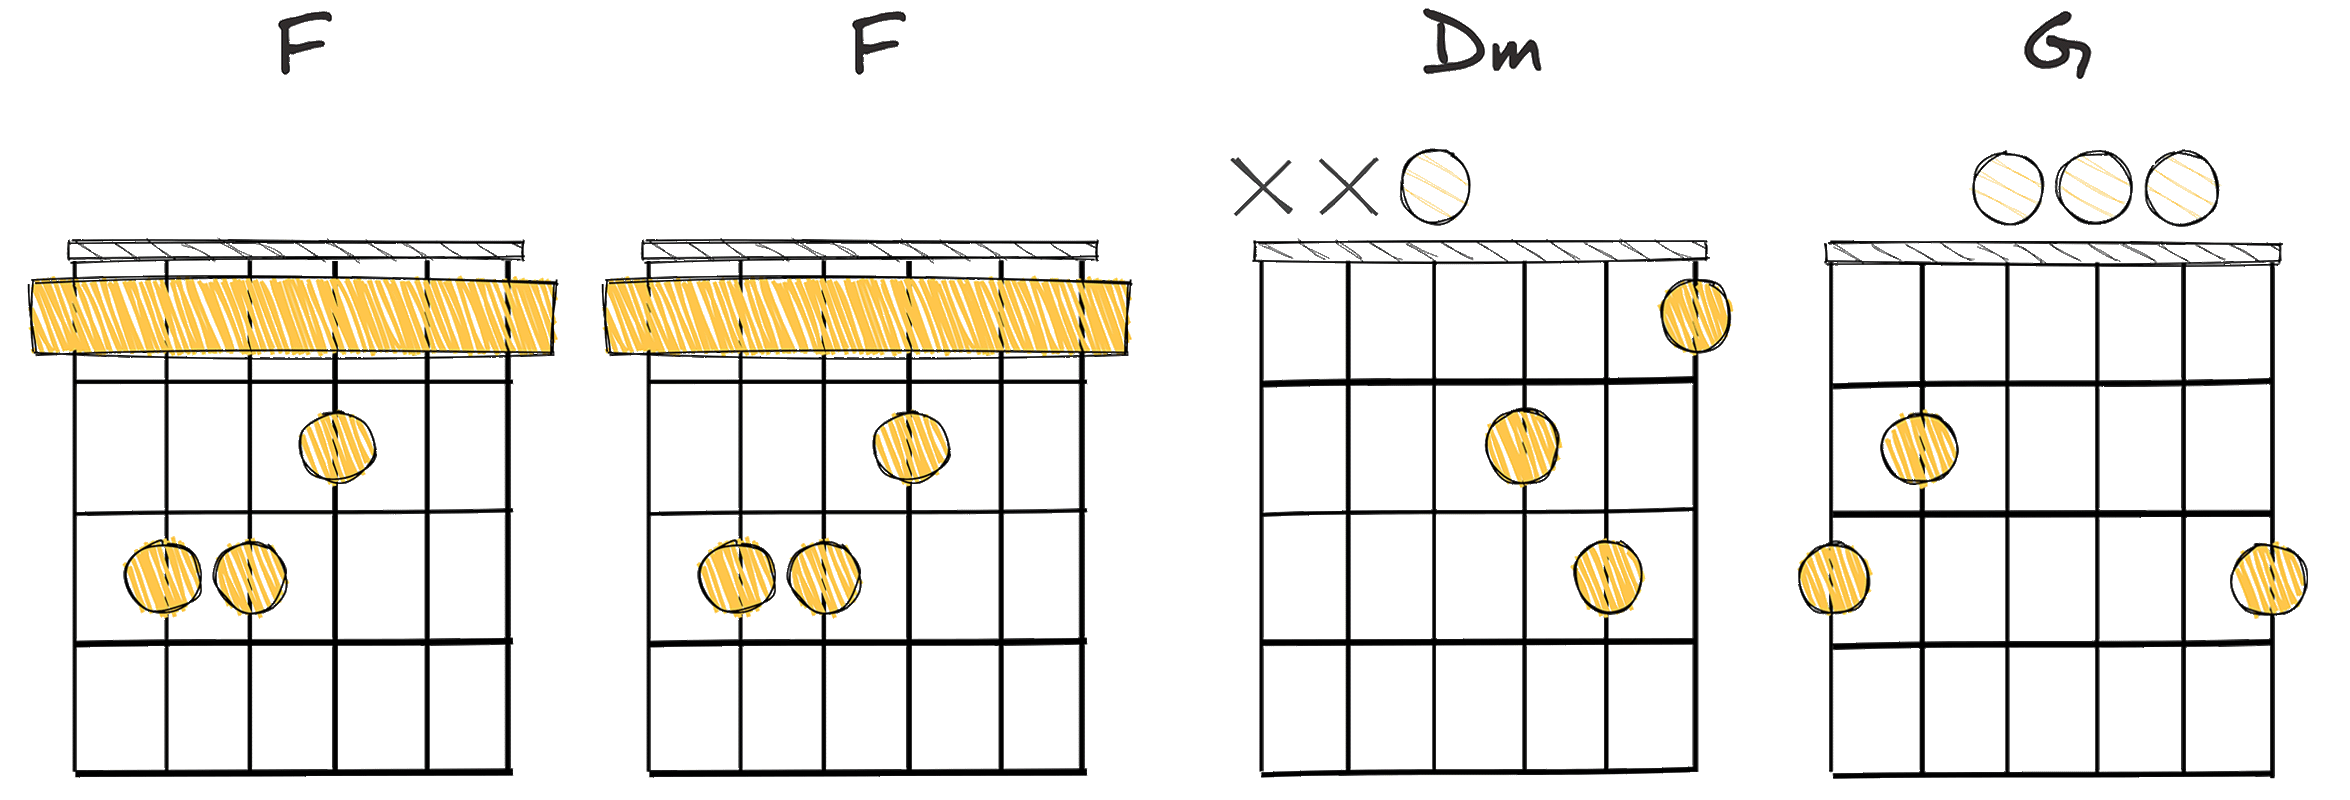 IV-IV-ii-V (4-4-2-5) chords diagram